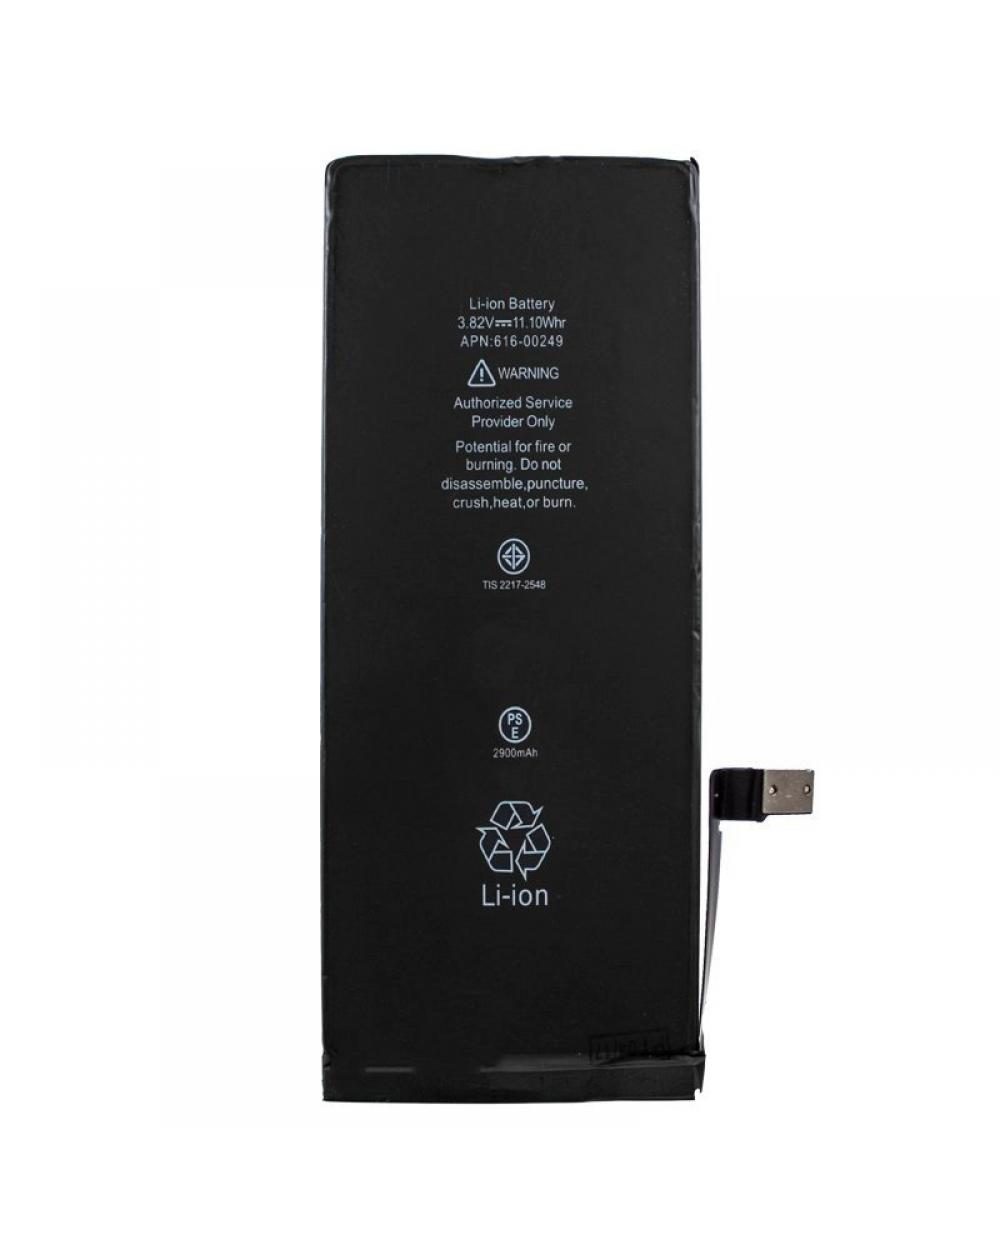 Bateria COOL Compatible para iPhone 7 Plus - Imagen 1